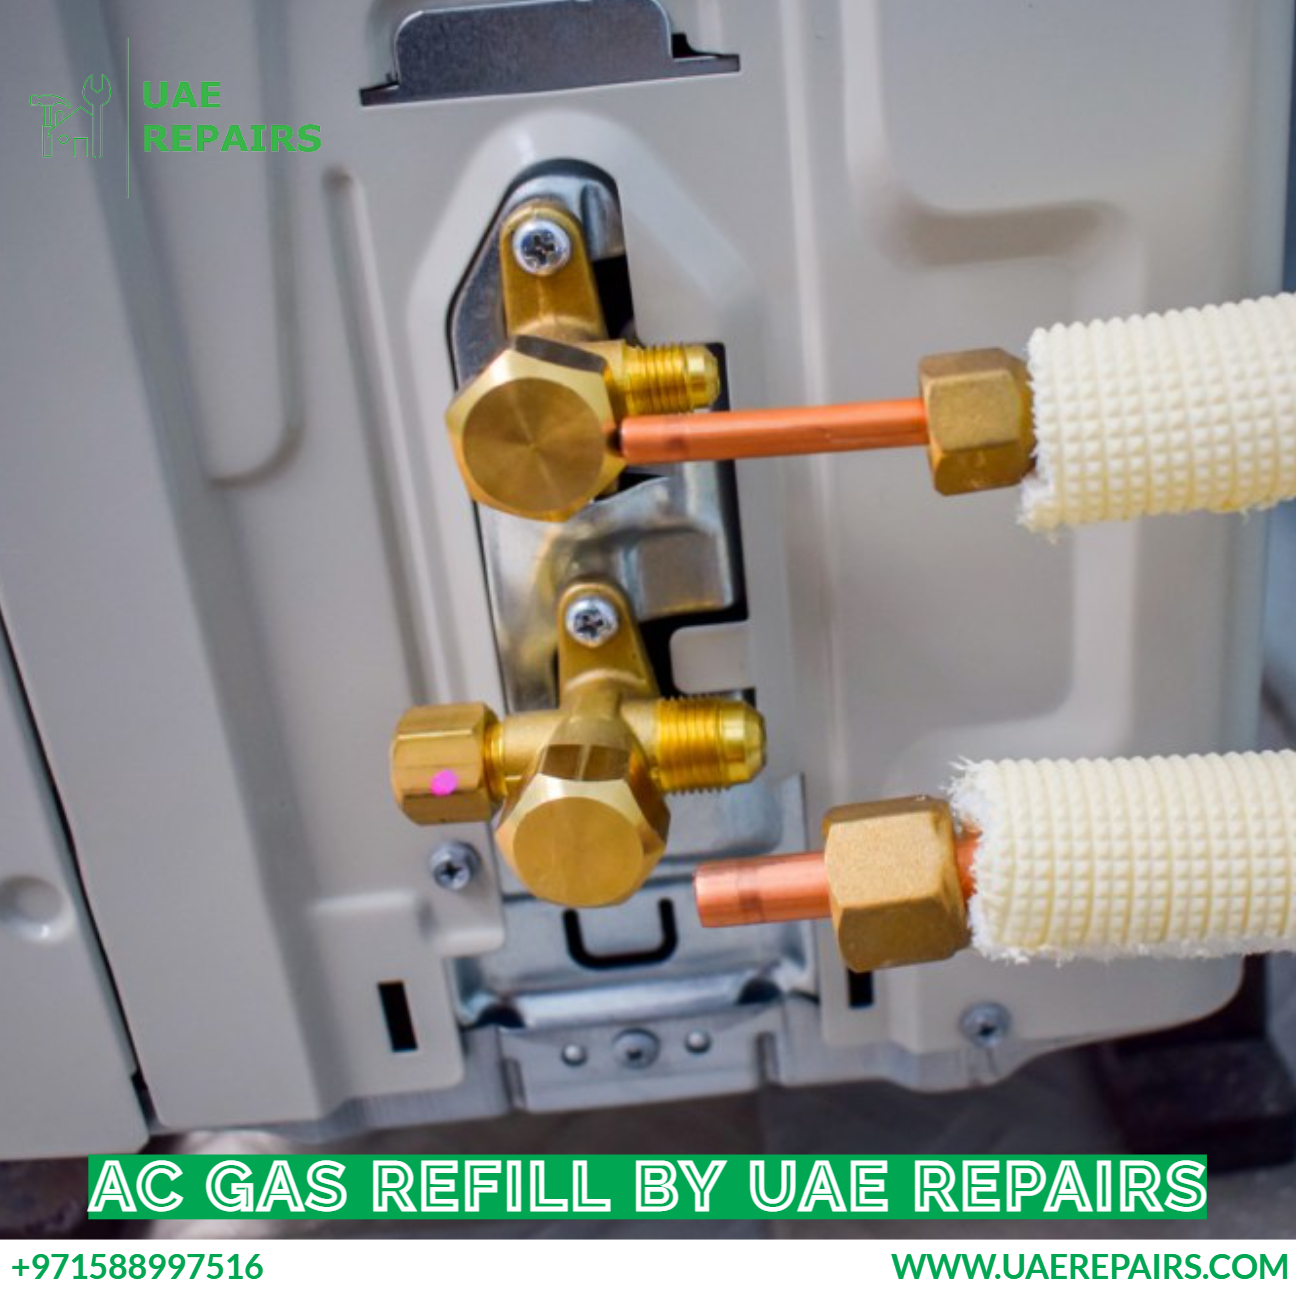 AC GAS REFILL BY UAE REPAIRS